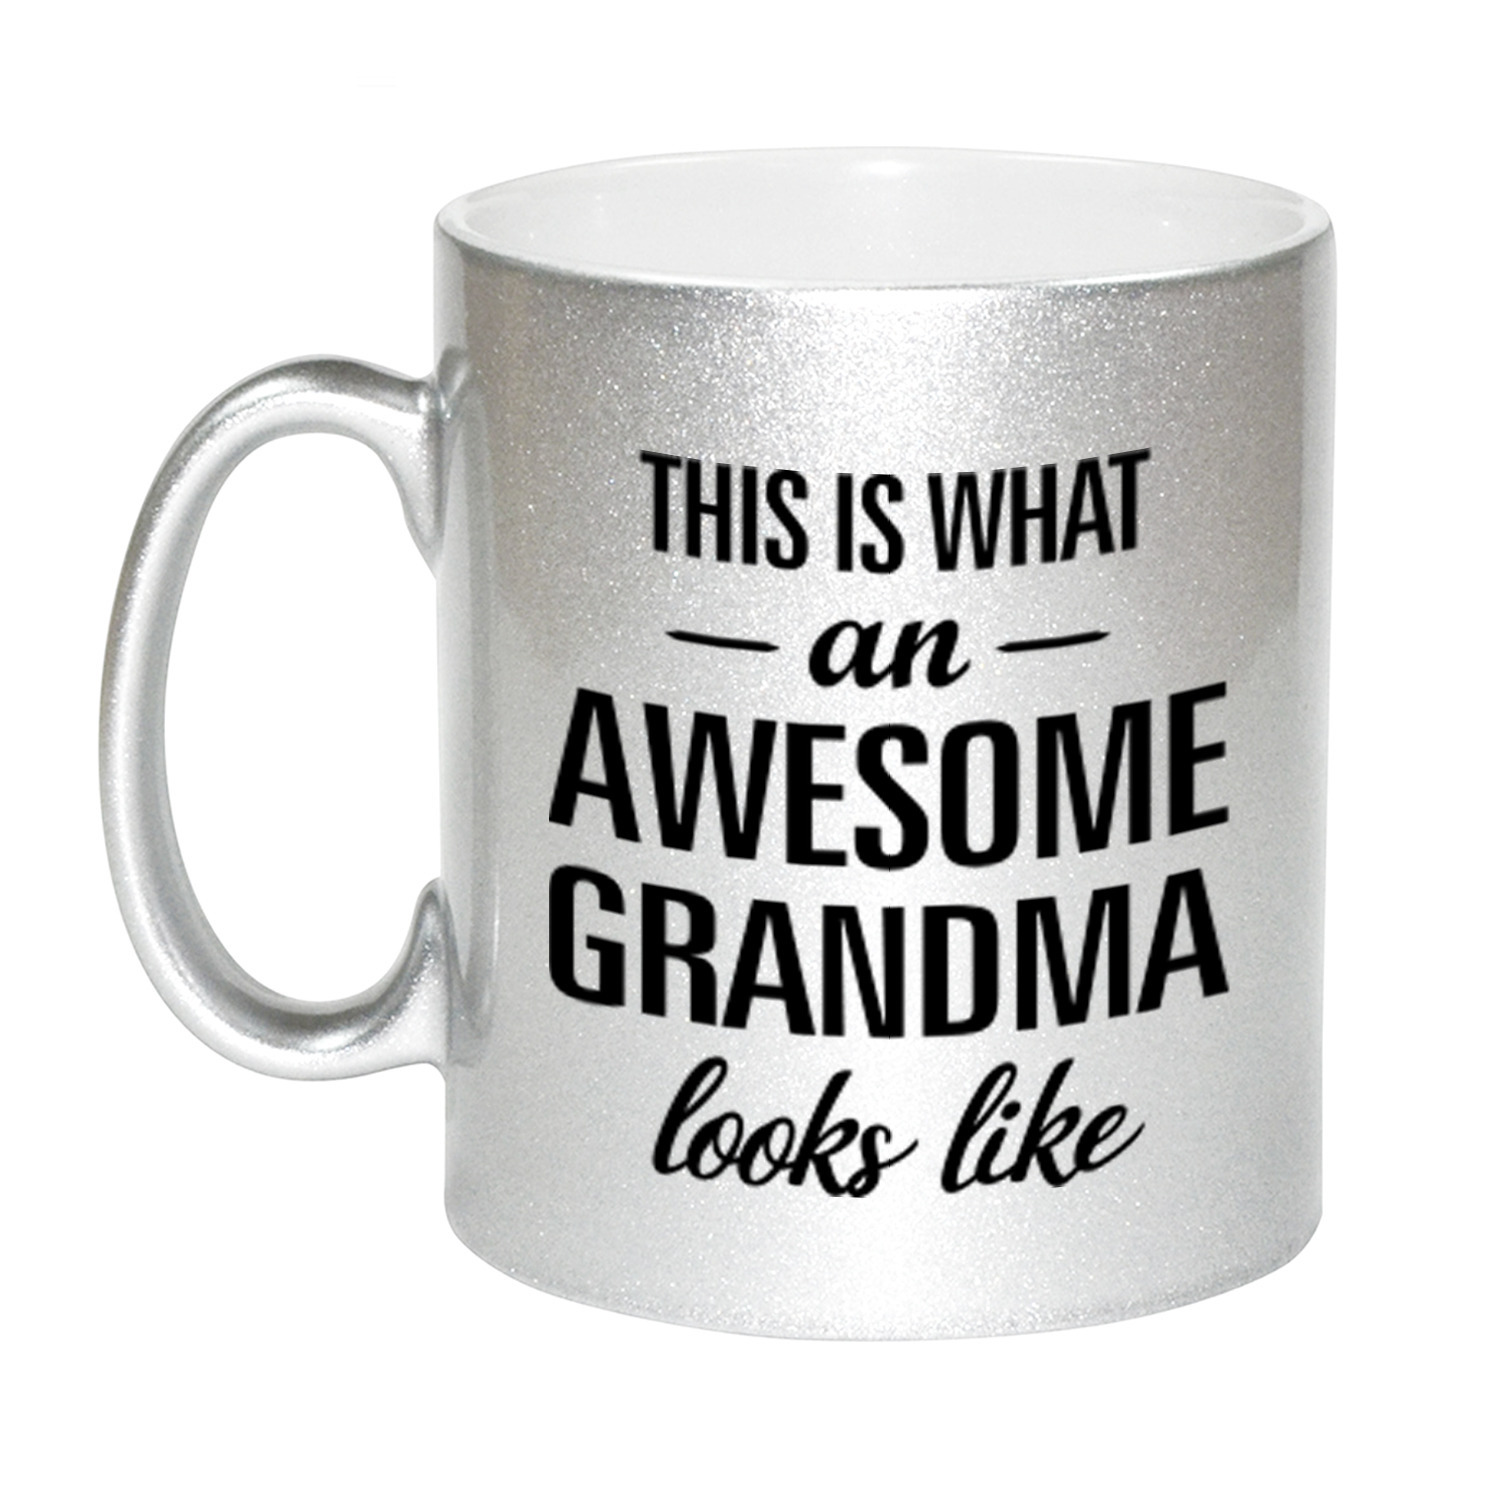 Awesome grandma / oma zilveren cadeau mok / beker 330 ml